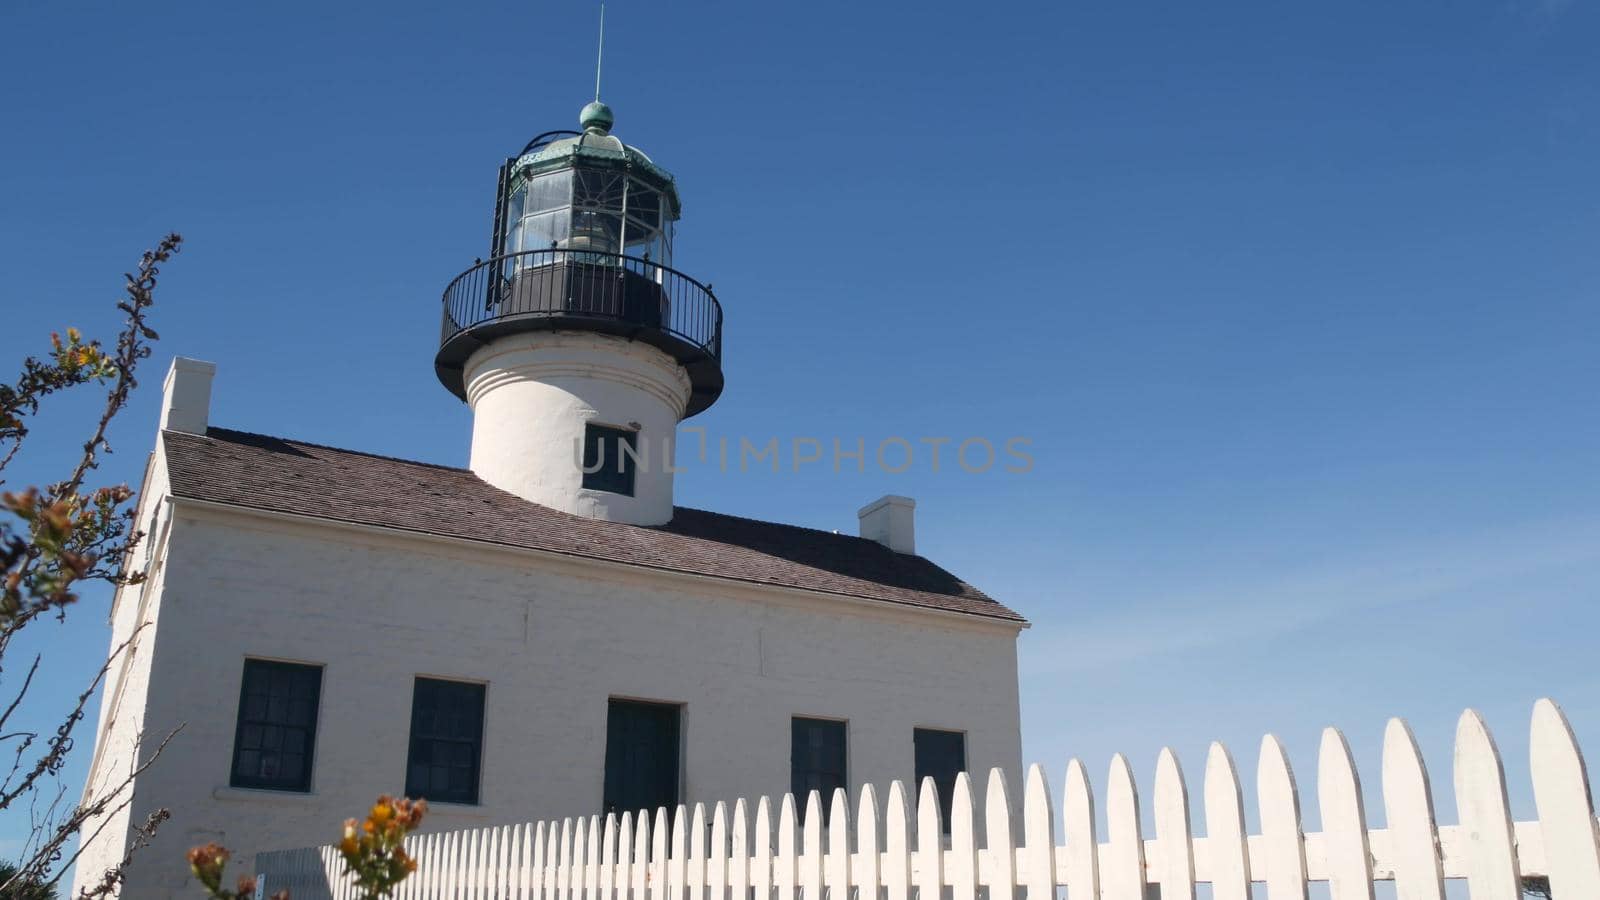 Vintage lighthouse tower, retro light house, old fashioned historic classic white beacon, fresnel lens. Nautical navigational coastal building, picket fence,1855. Point Loma, San Diego, California USA